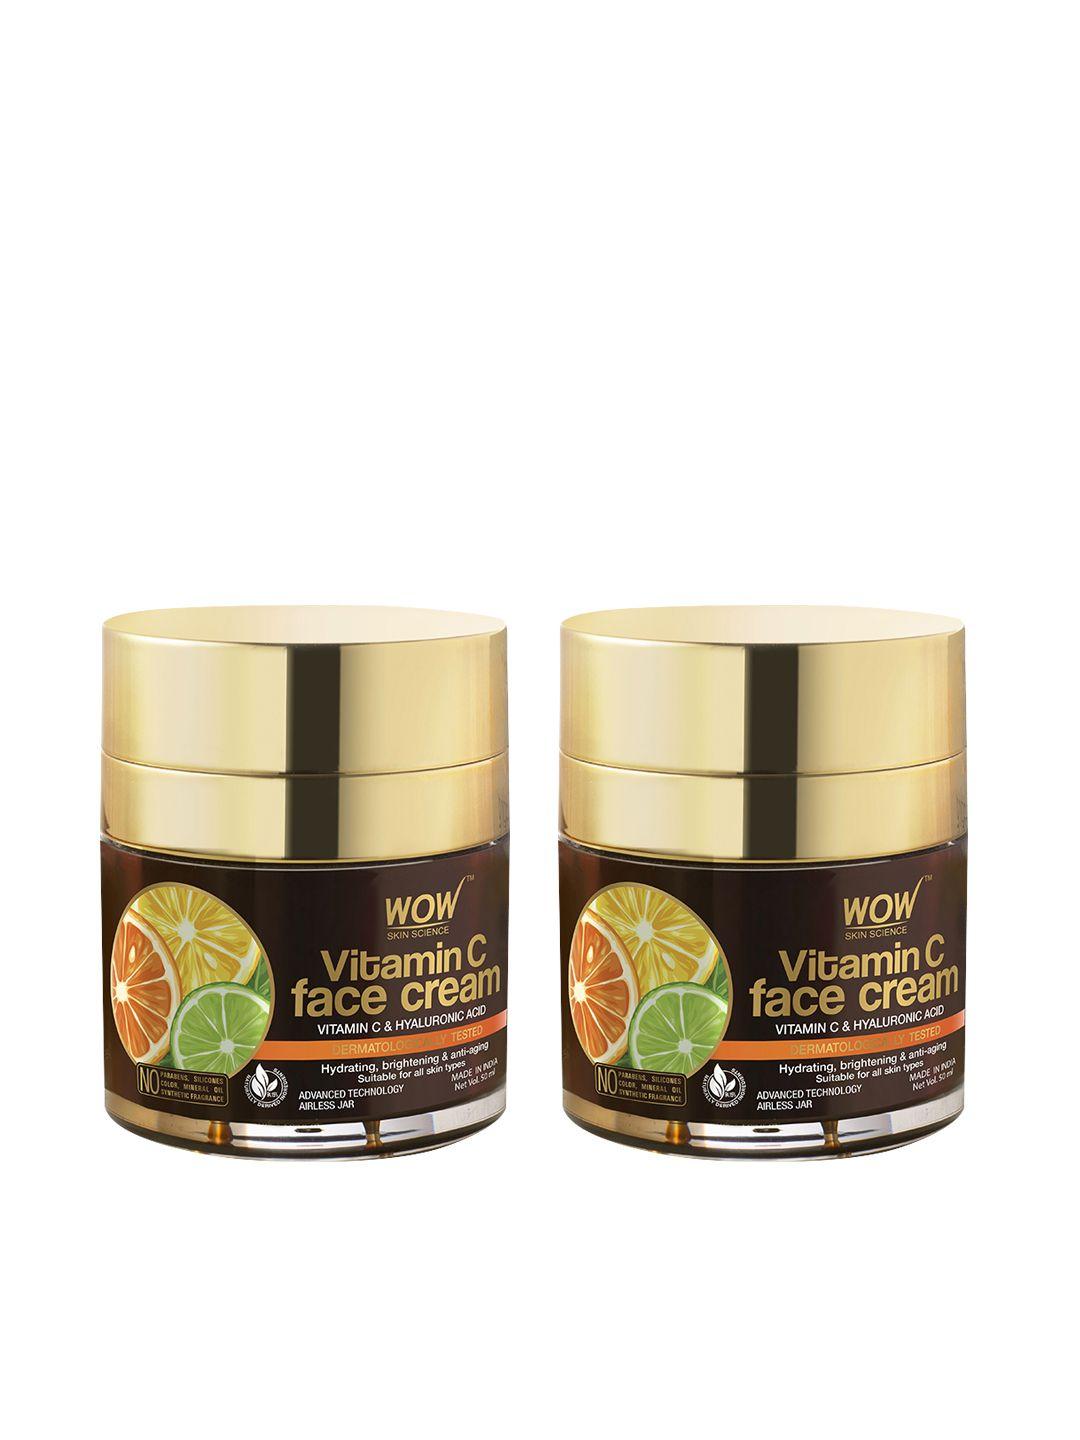 wow skin science set of 2 vitamin c face cream - 50 ml each